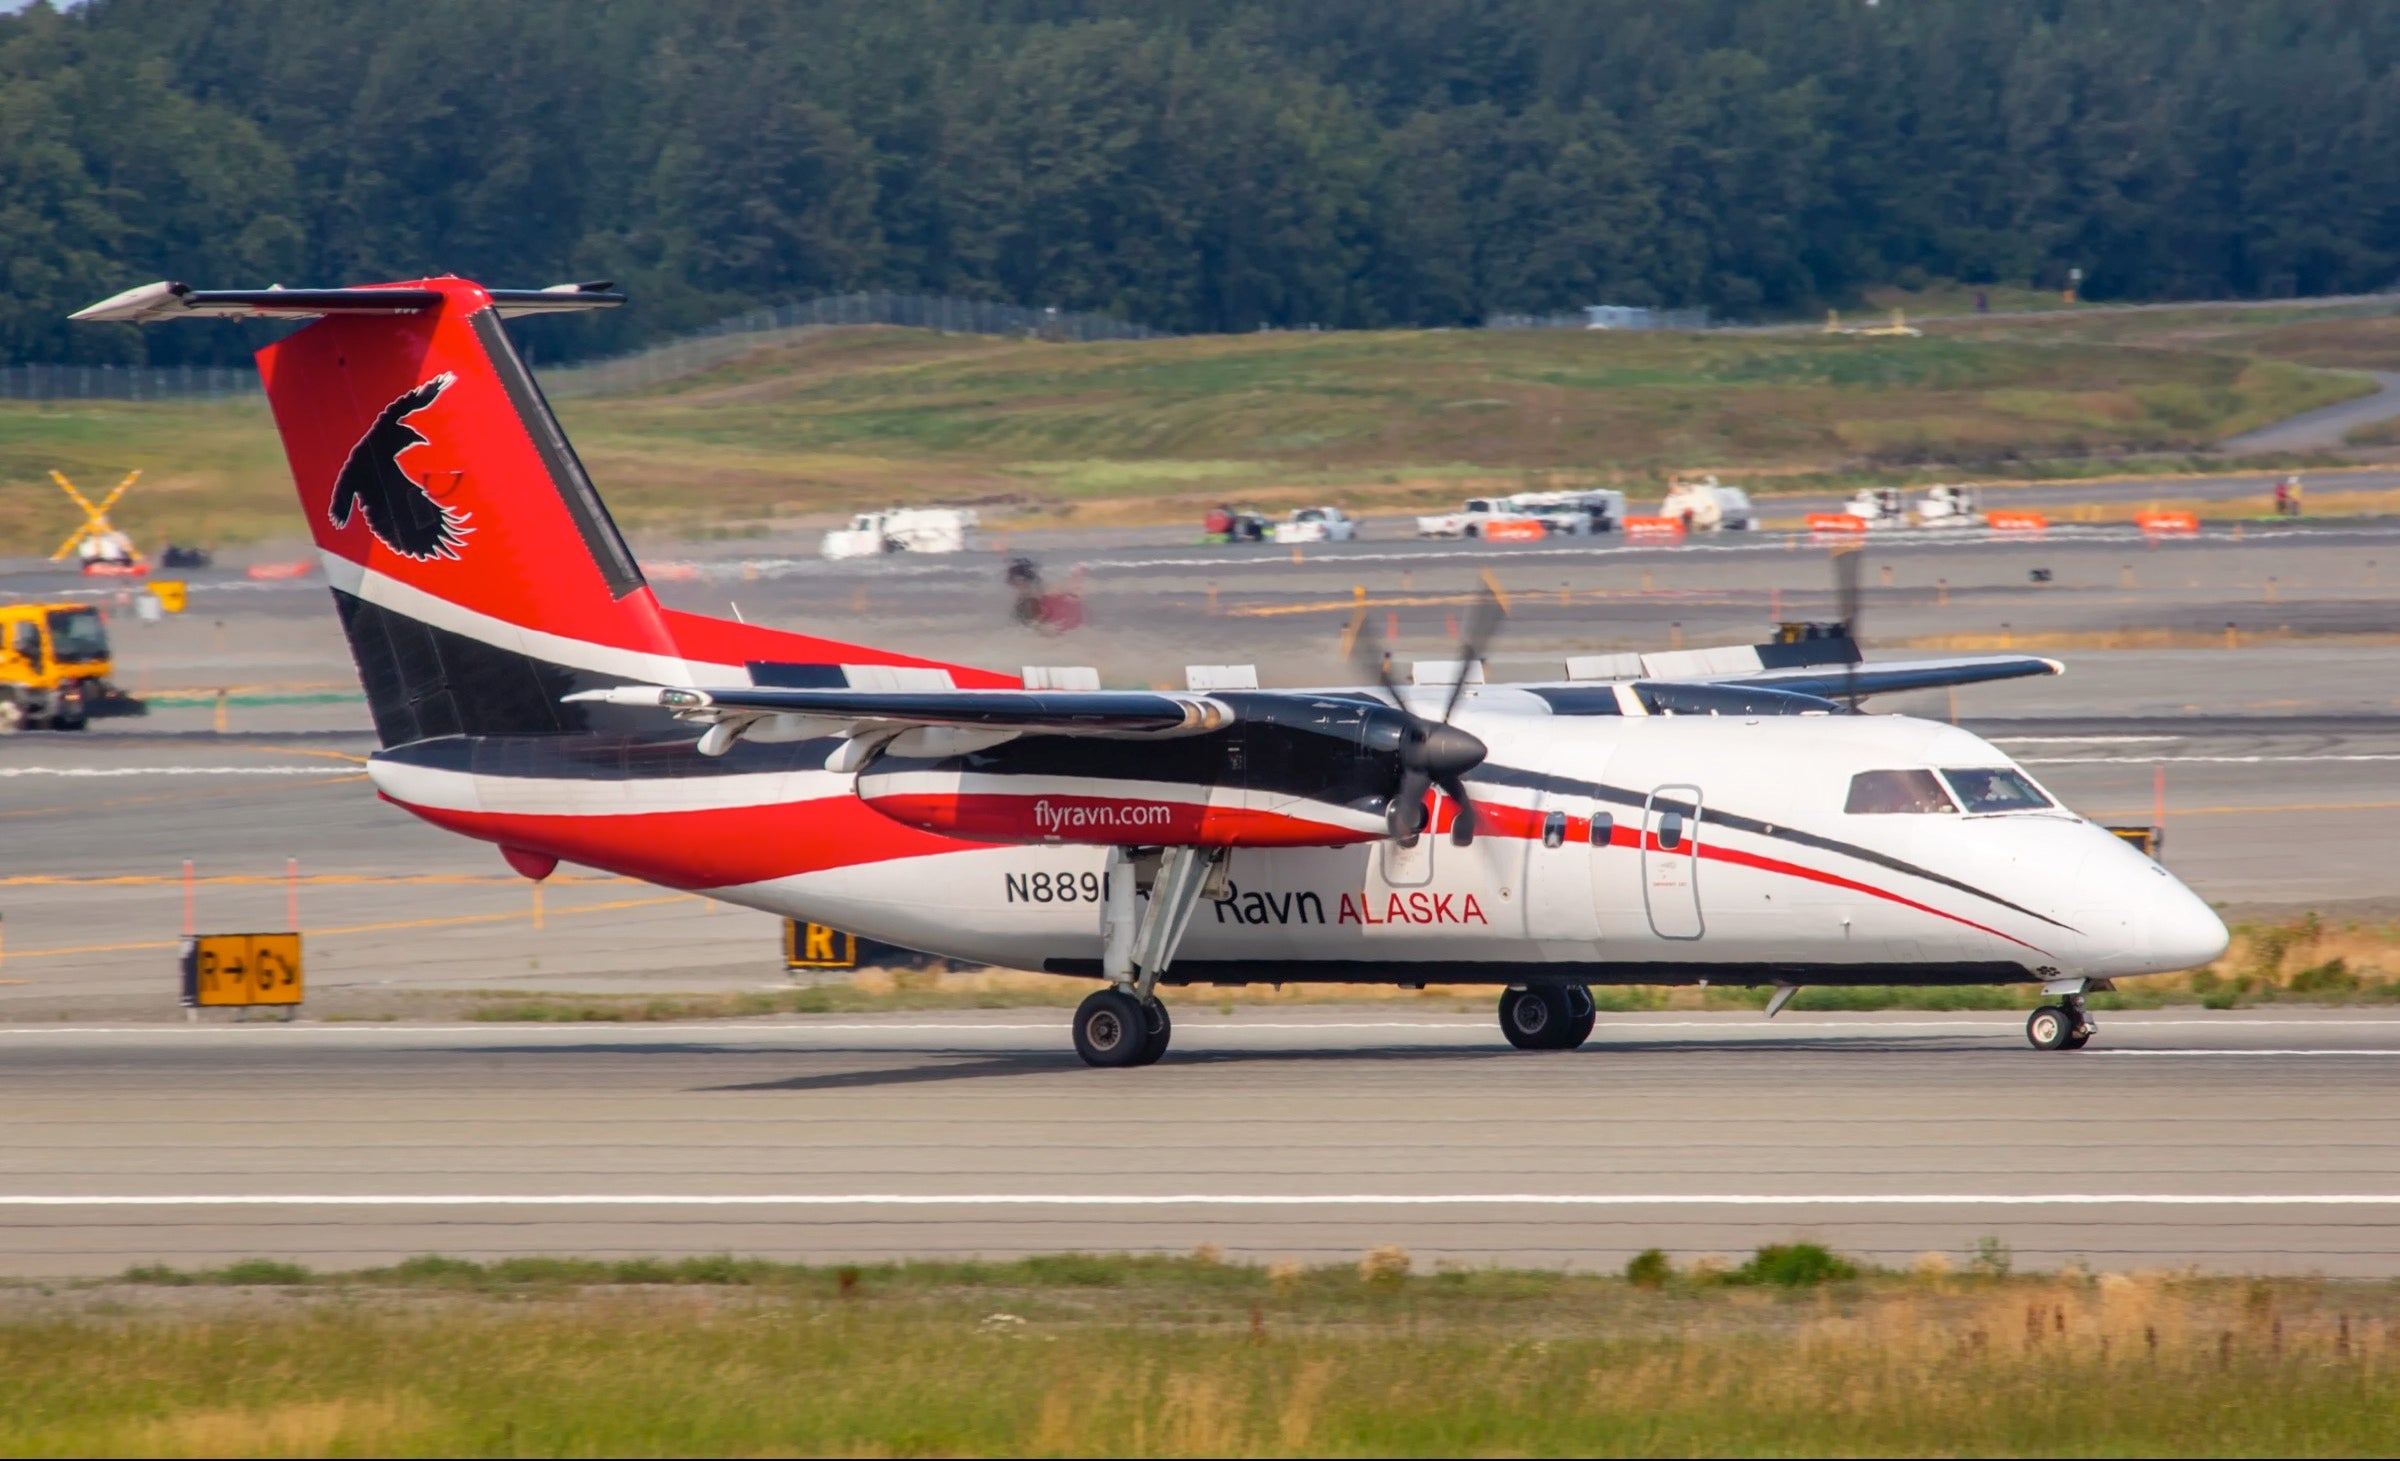 Redeeming Alaska Airways miles for Ravn Alaska flights